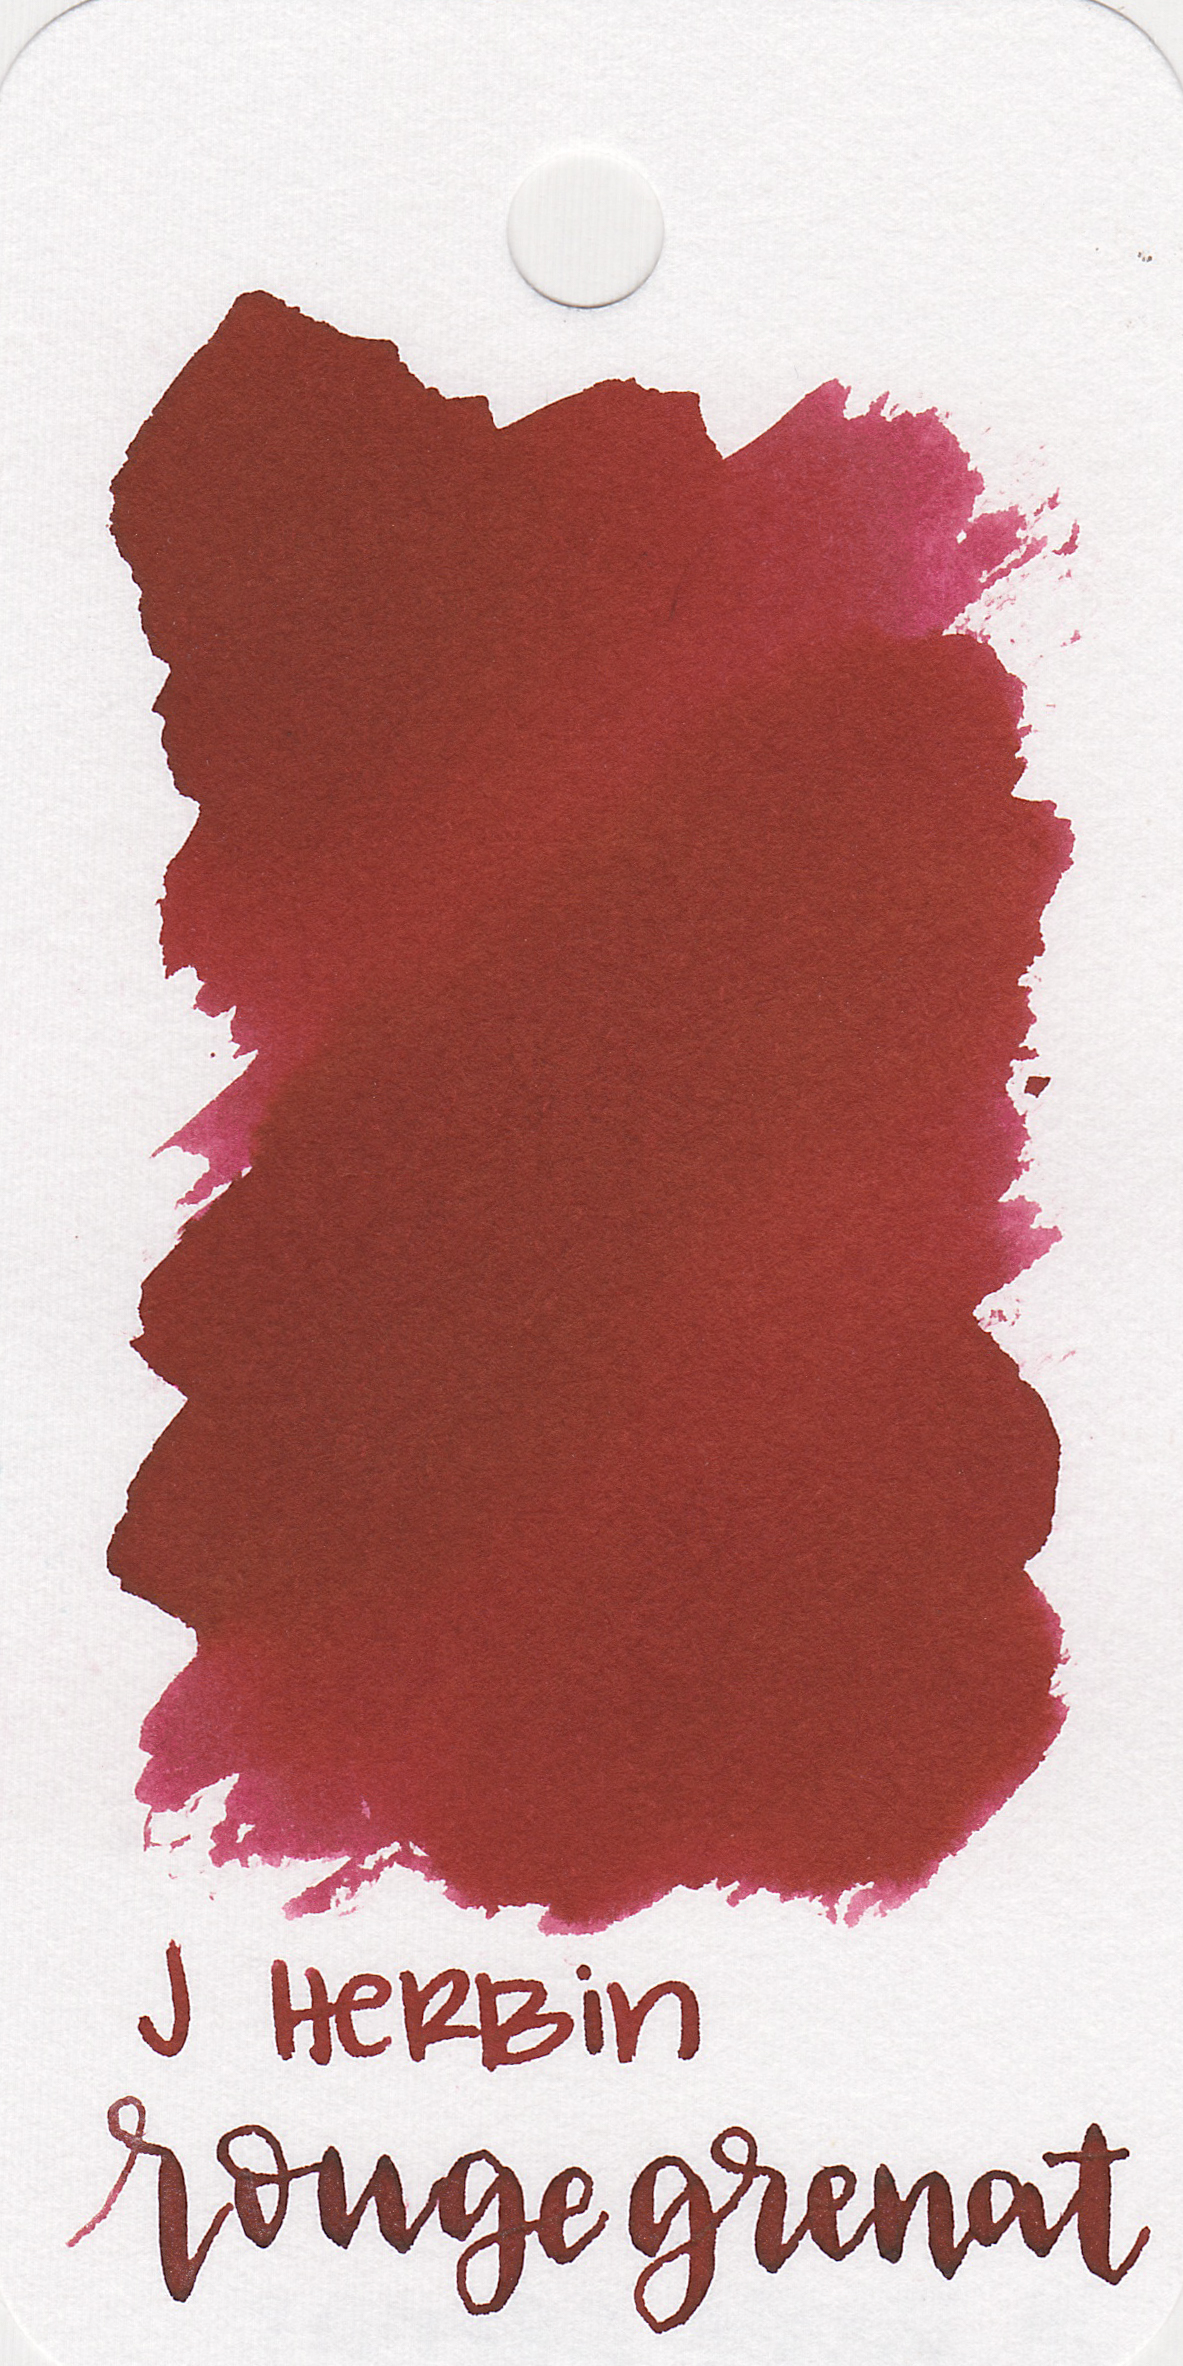  J. Herbin Rouge Grenat Ink (Garnet Red) - 30 ml Bottle